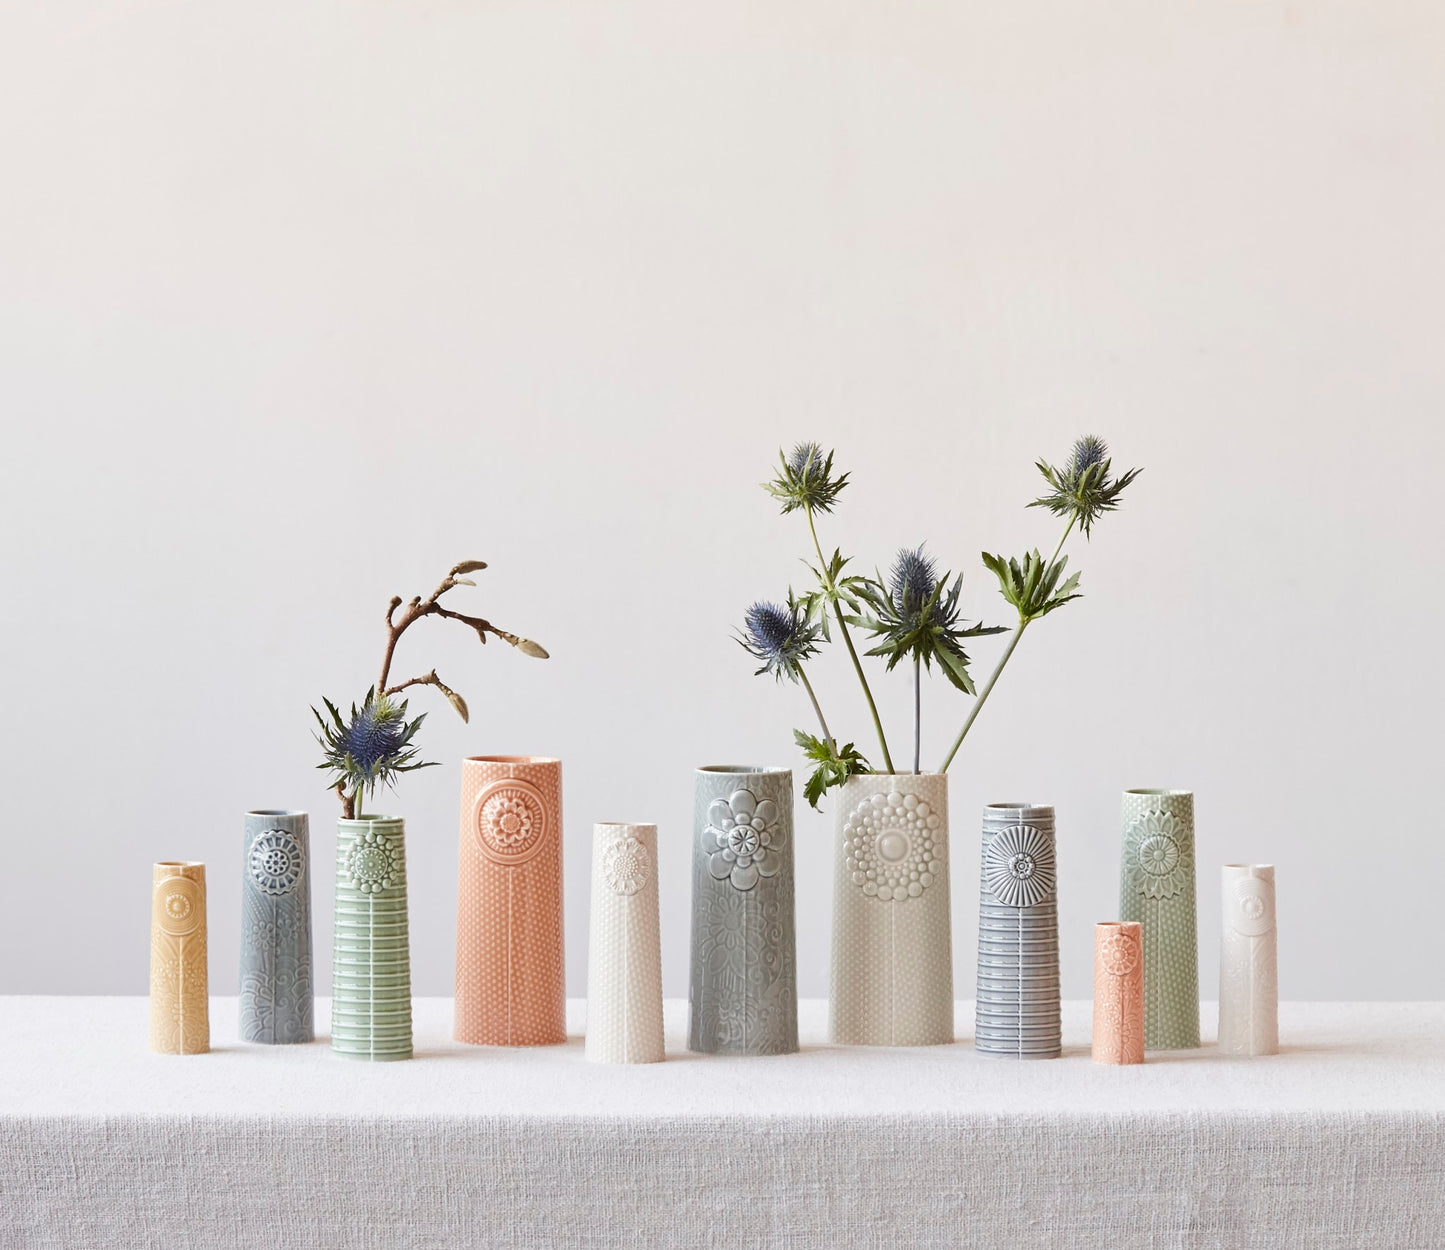 Pipanella Flock - Summer Love (1 small, 1 mini, 1 micro) set of 3 vases